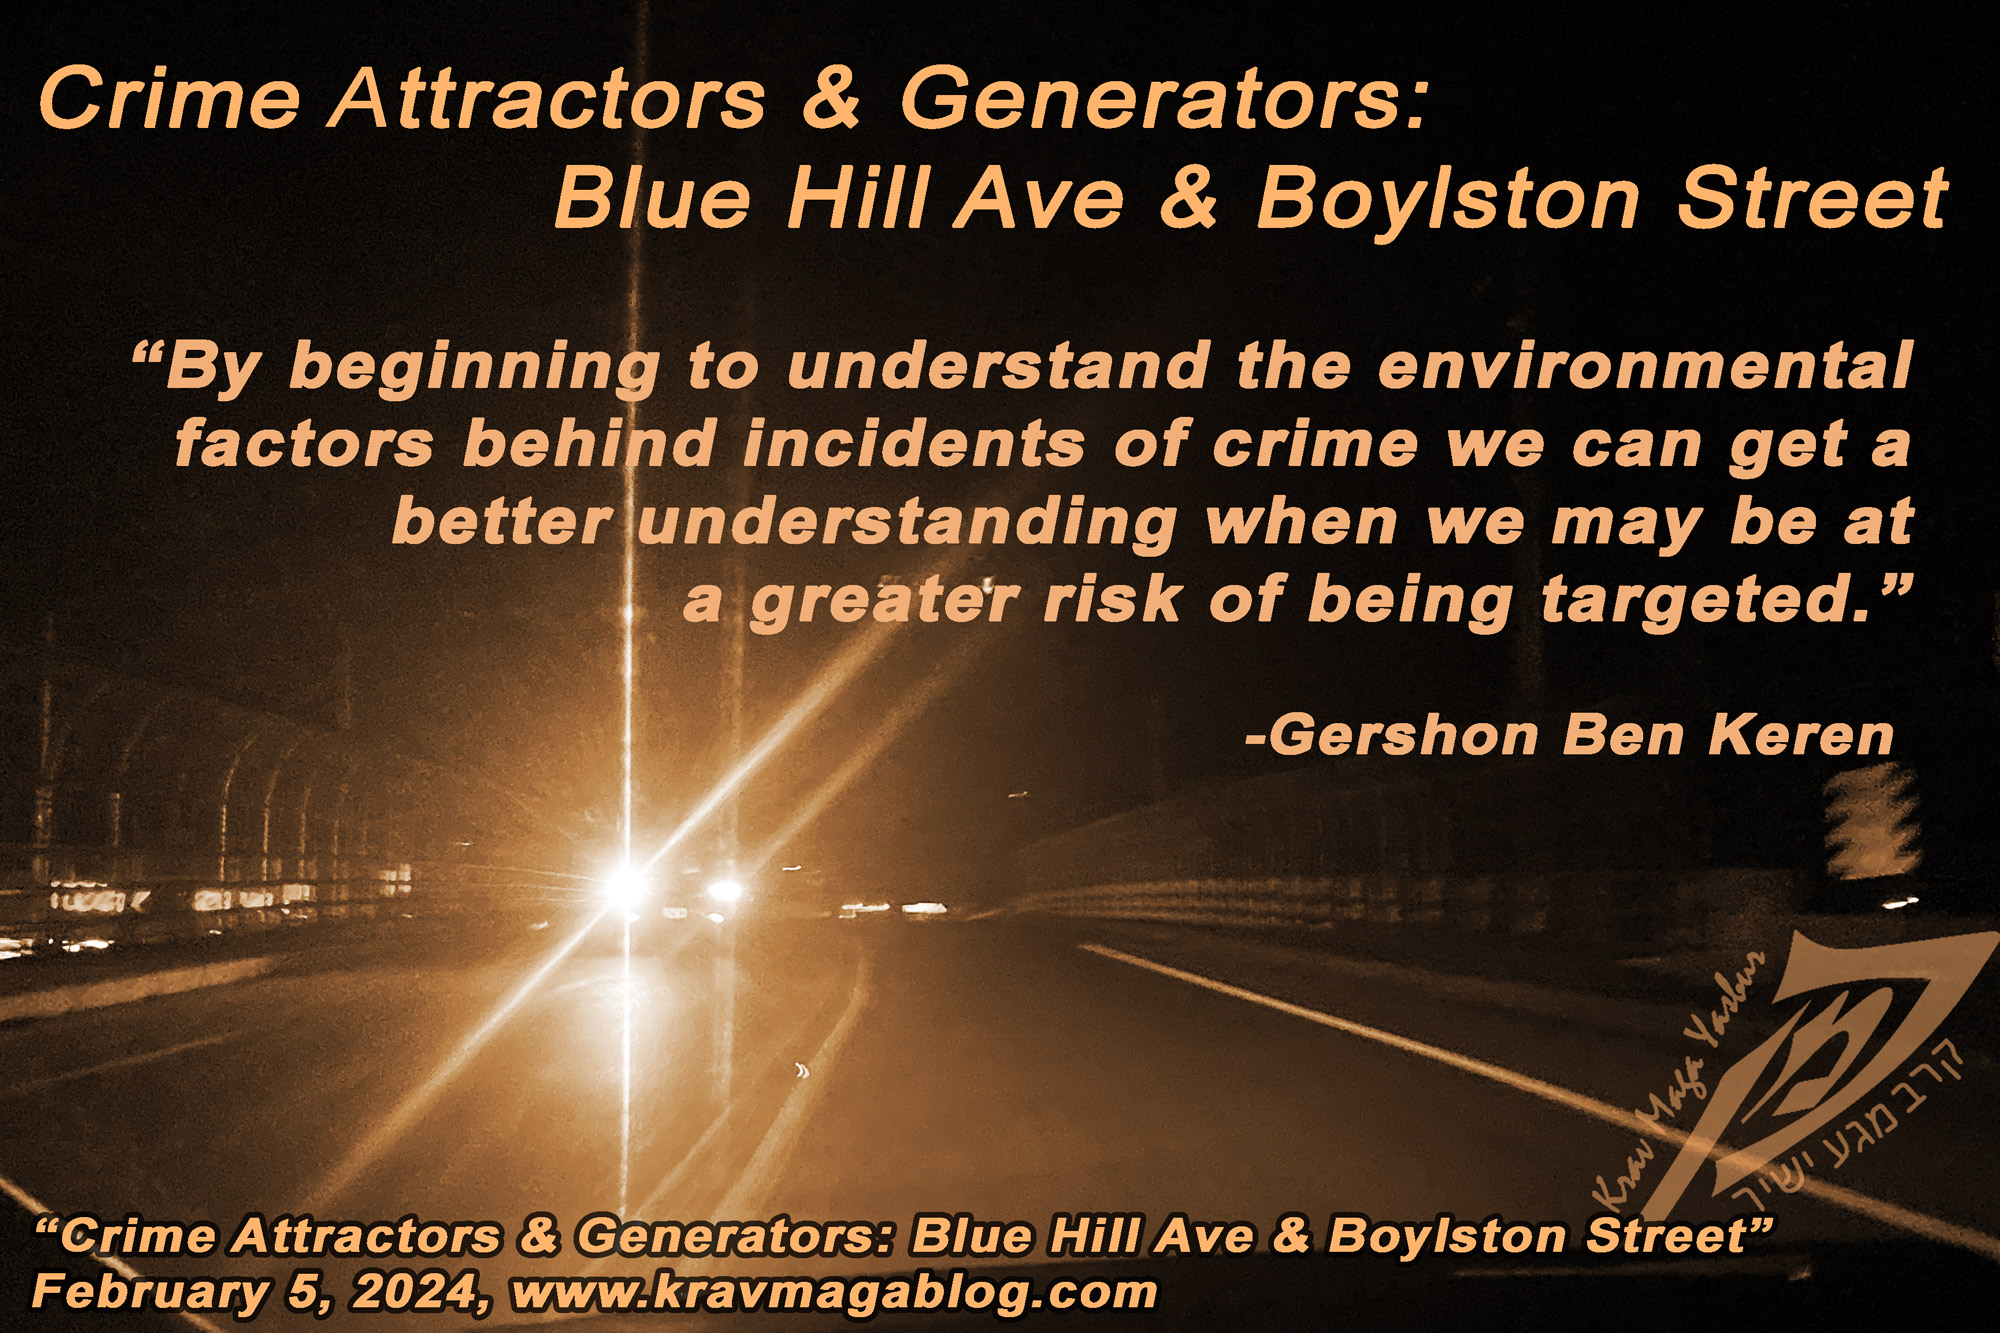 Blog About Crime Attractors & Generators: Blue Hill Ave & Boylston Street